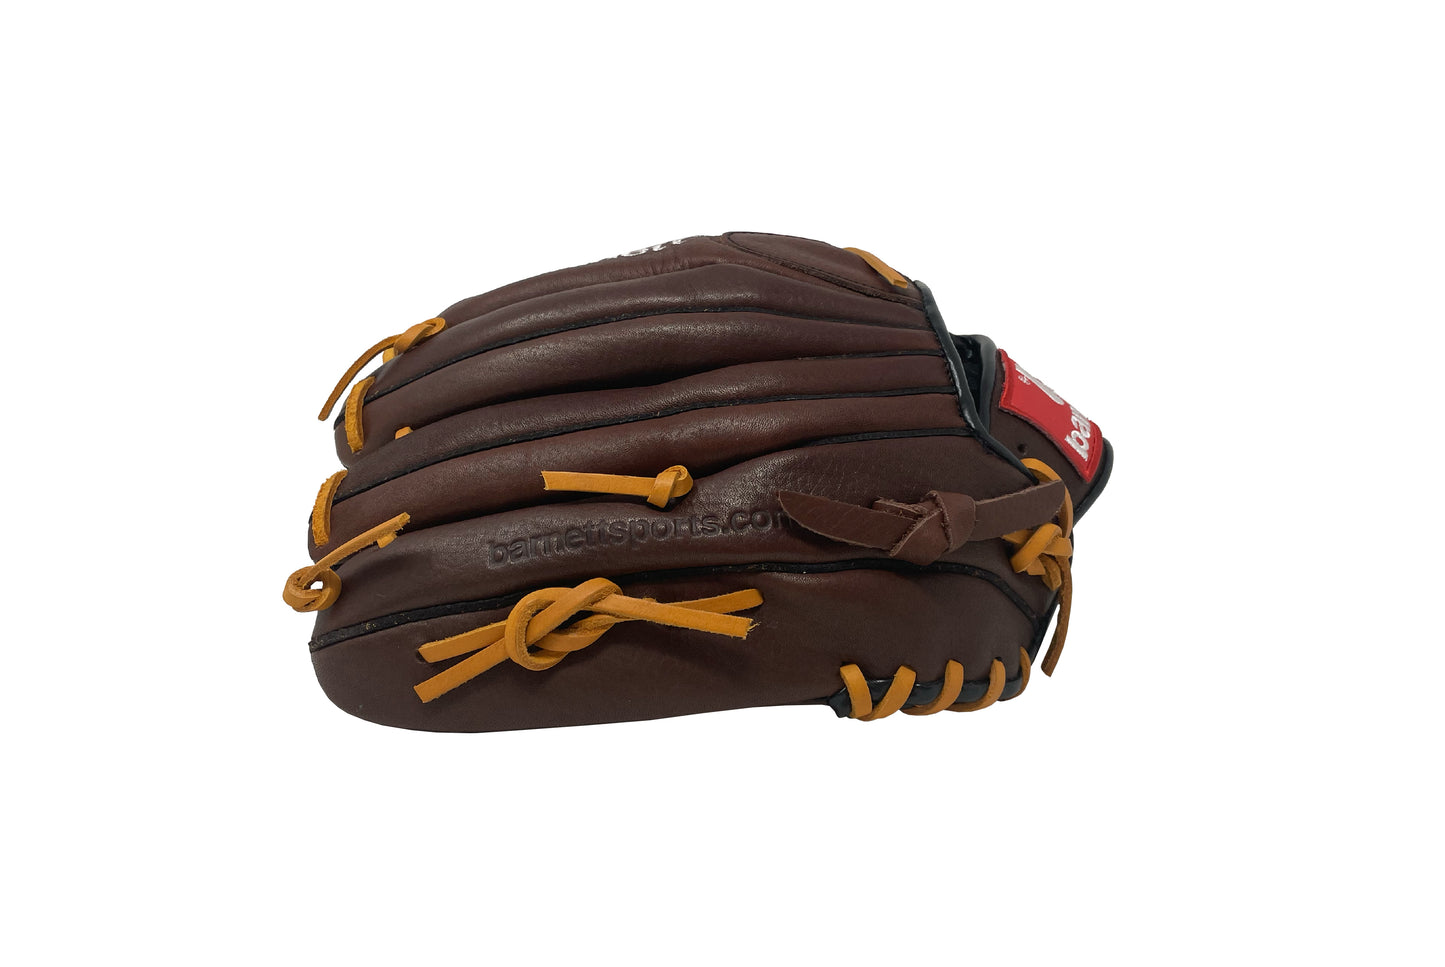 GL-125 gant de baseball de compétition cuir 12.5" Marron